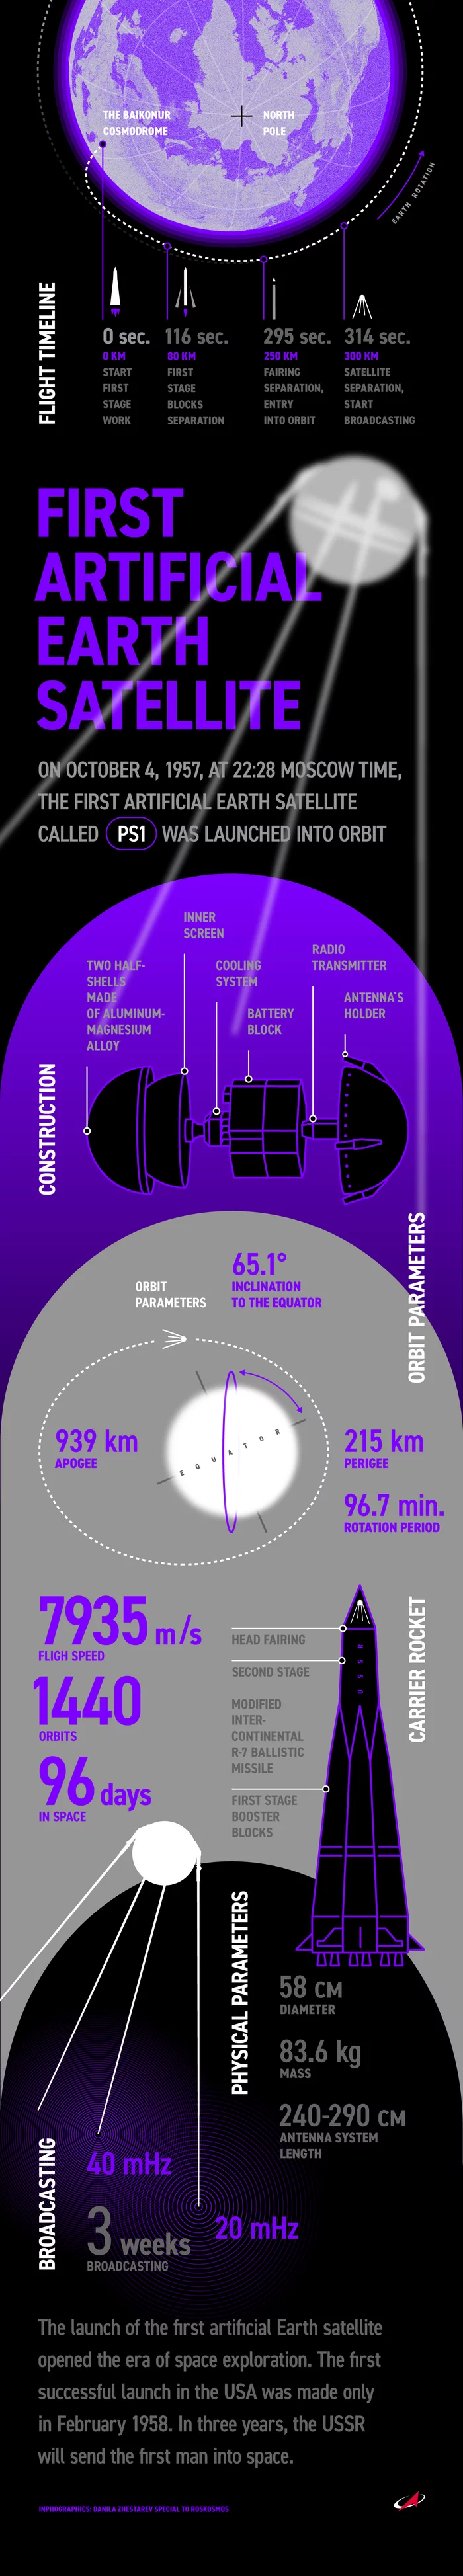 Sputnik-1 infographic - My, Design, Idea, Creative, Space, Satellites, Spaceship, Longpost